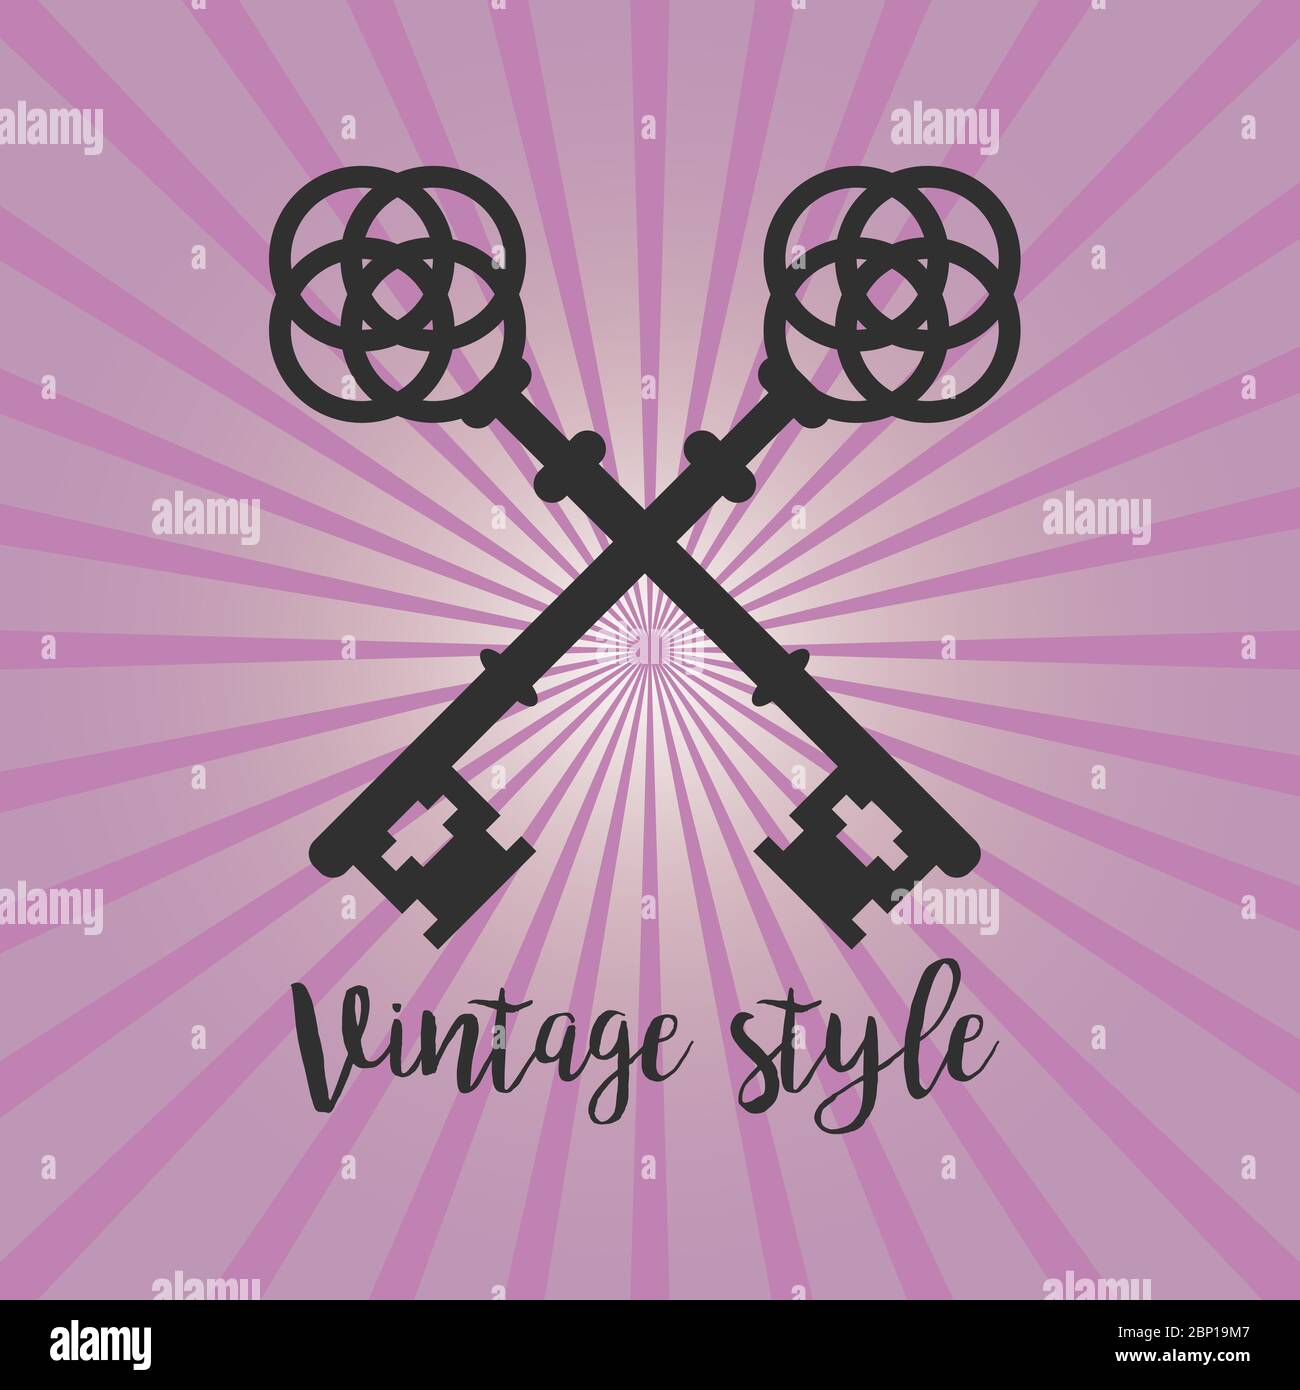 Vintage crossed keys silhouette on purple background with vintage style, vector illustration Stock Vector